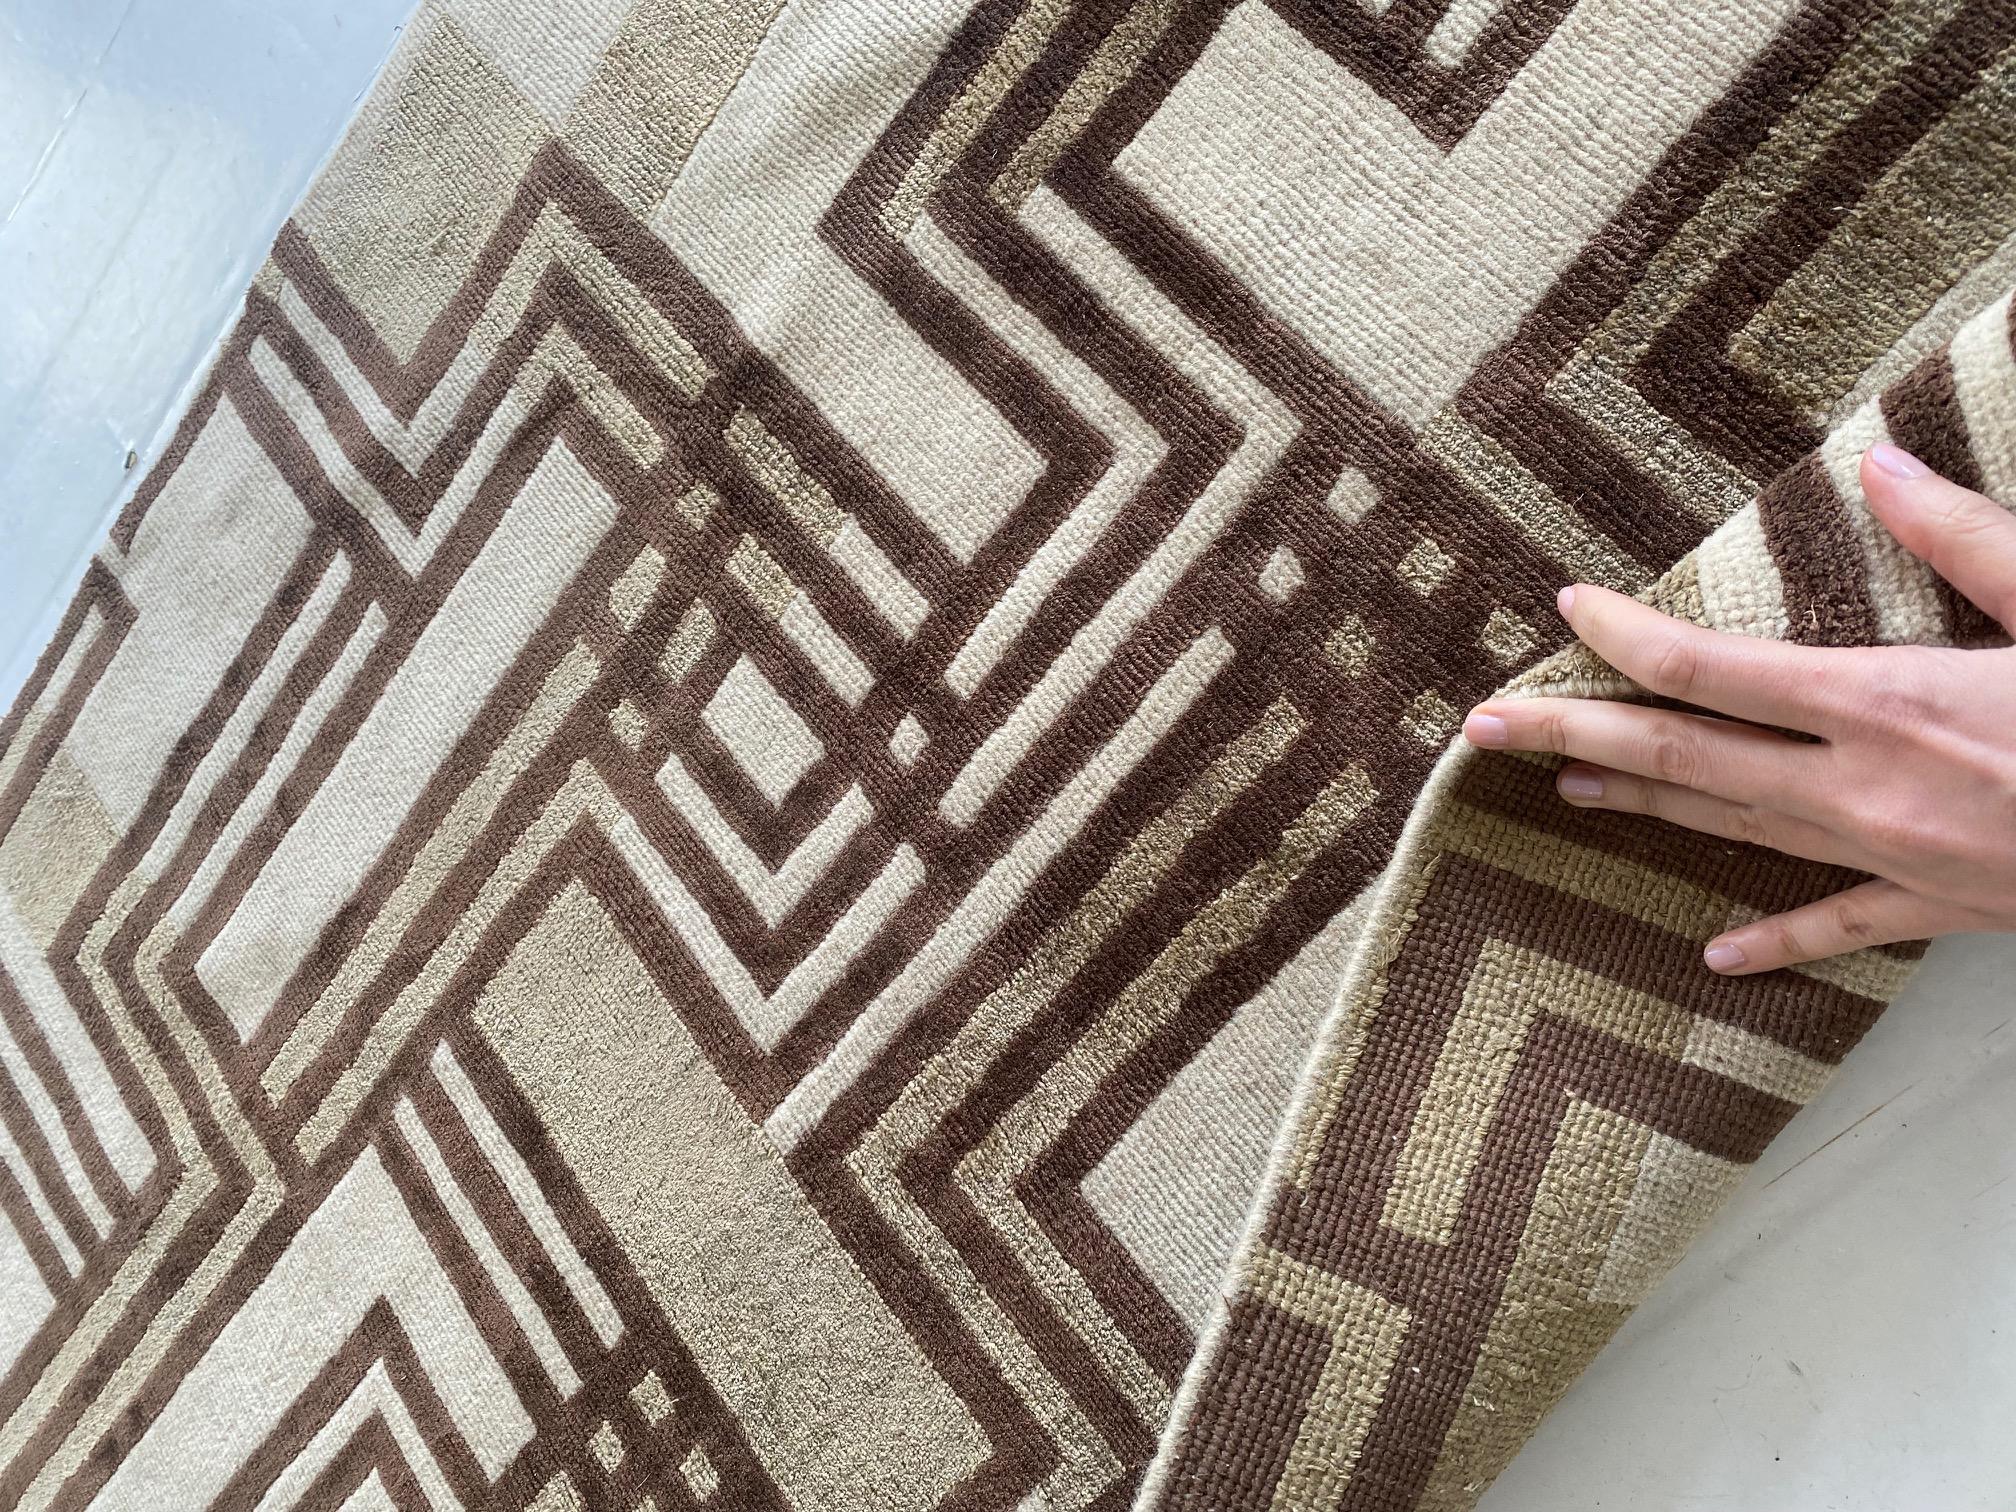 Contemporary long & narrow geometric wool & silk Runner by Doris Leslie Blau
Size: 2.7